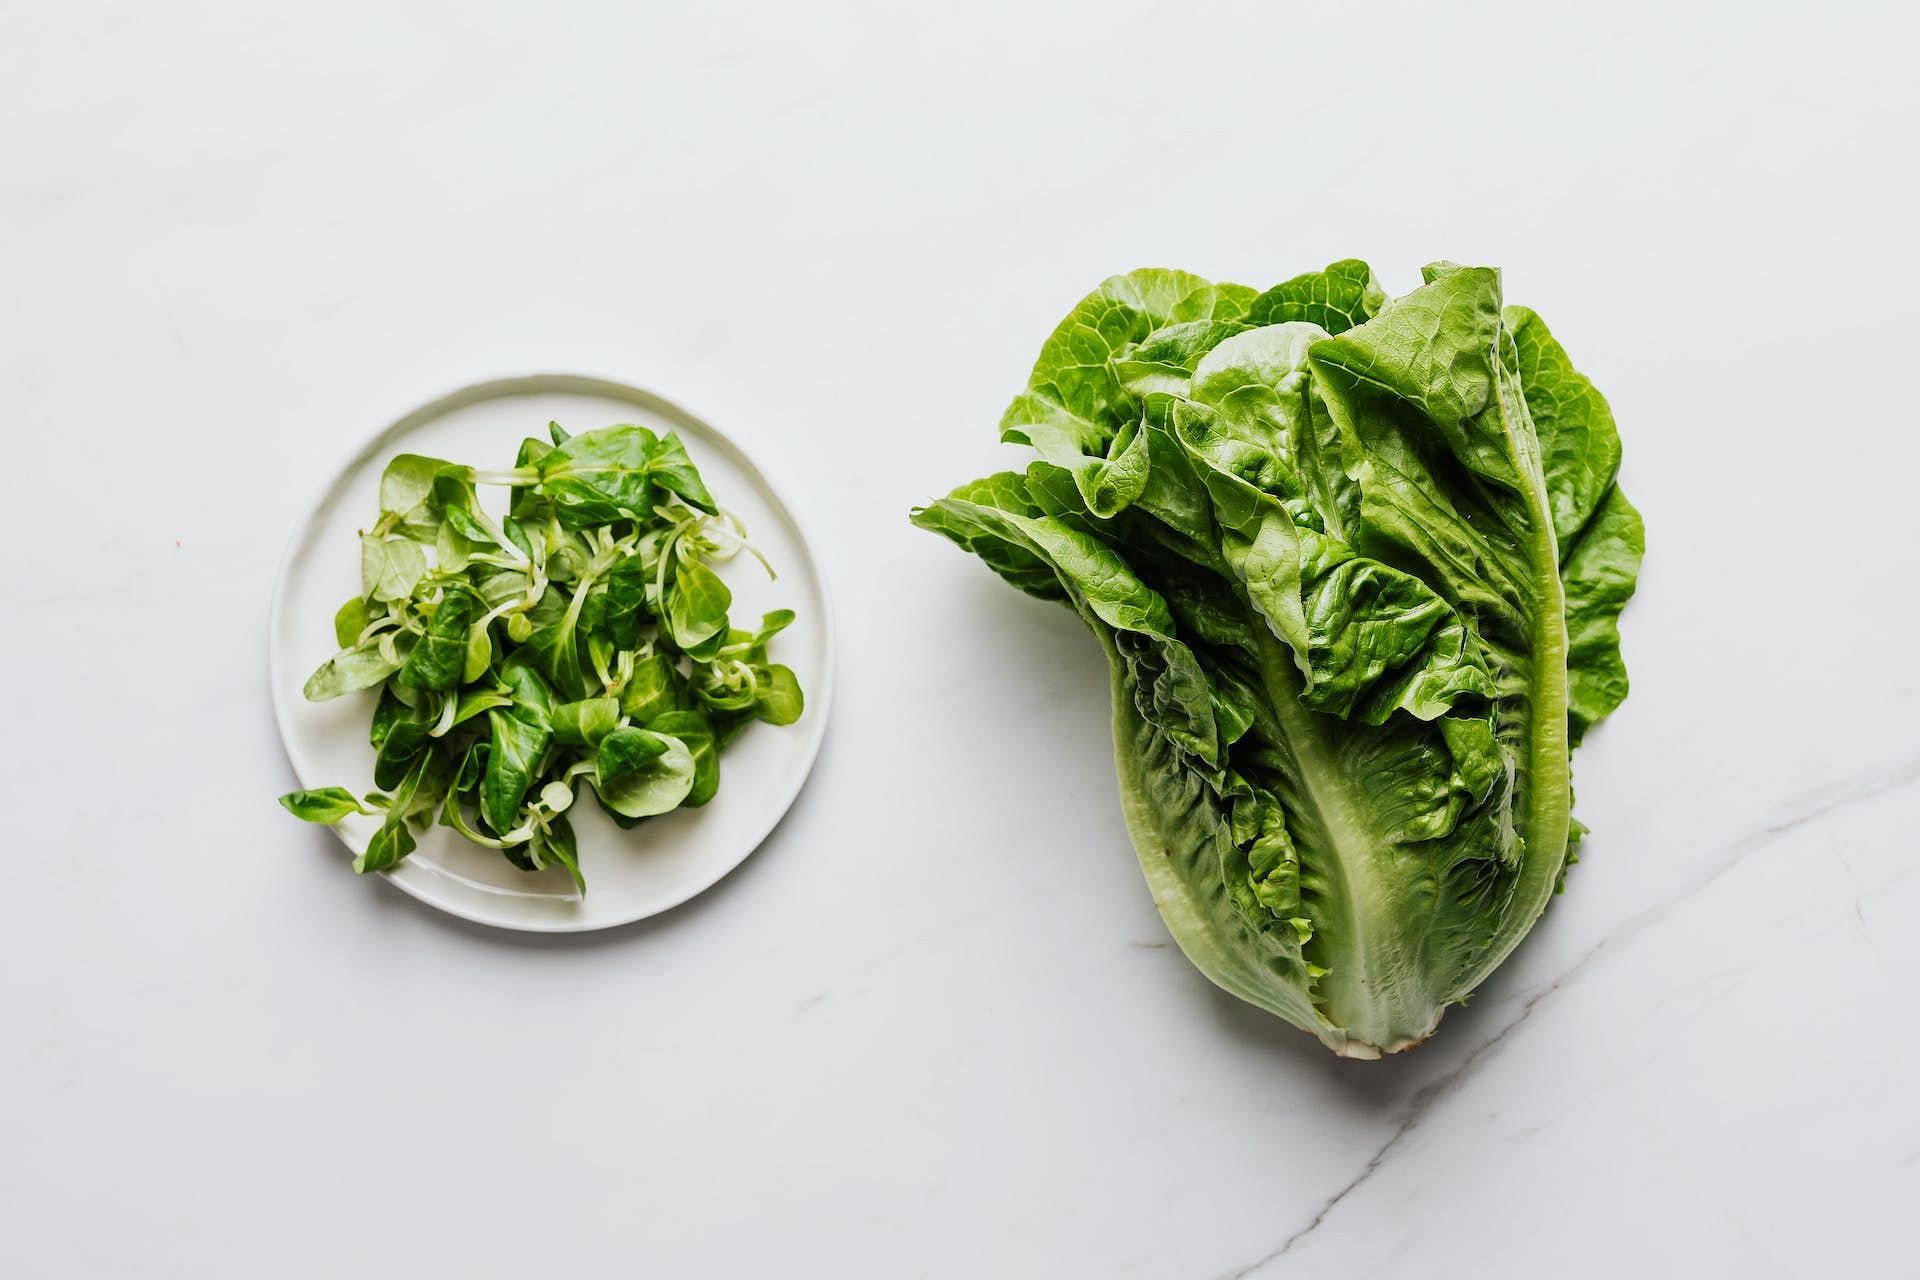 Green leafy vegetables improve brain functioning. (Image via Pexels/Karolina Grabowska)